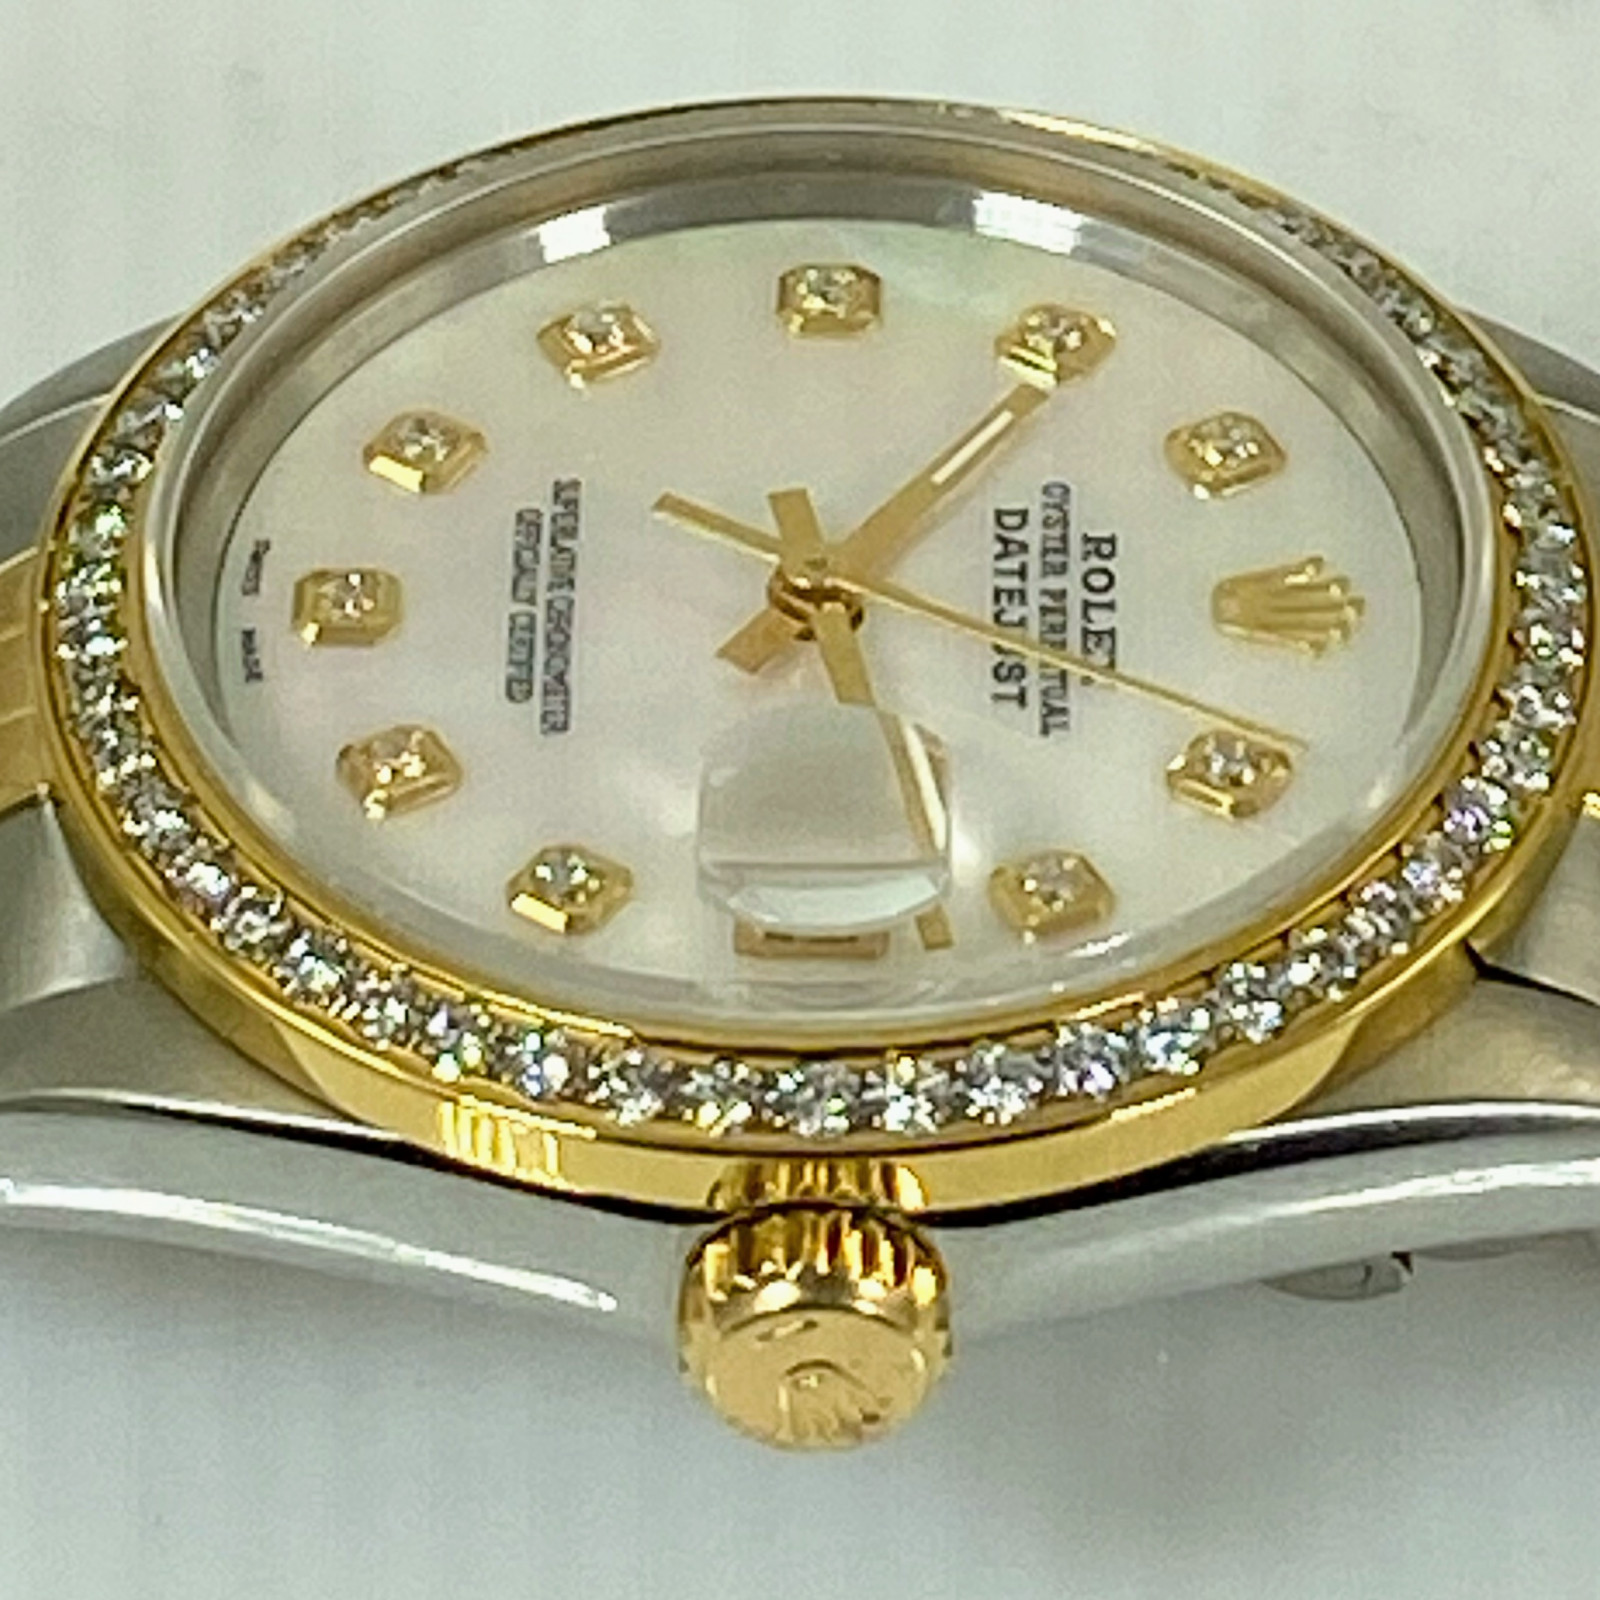 Rolex Diamond Datejust 16013